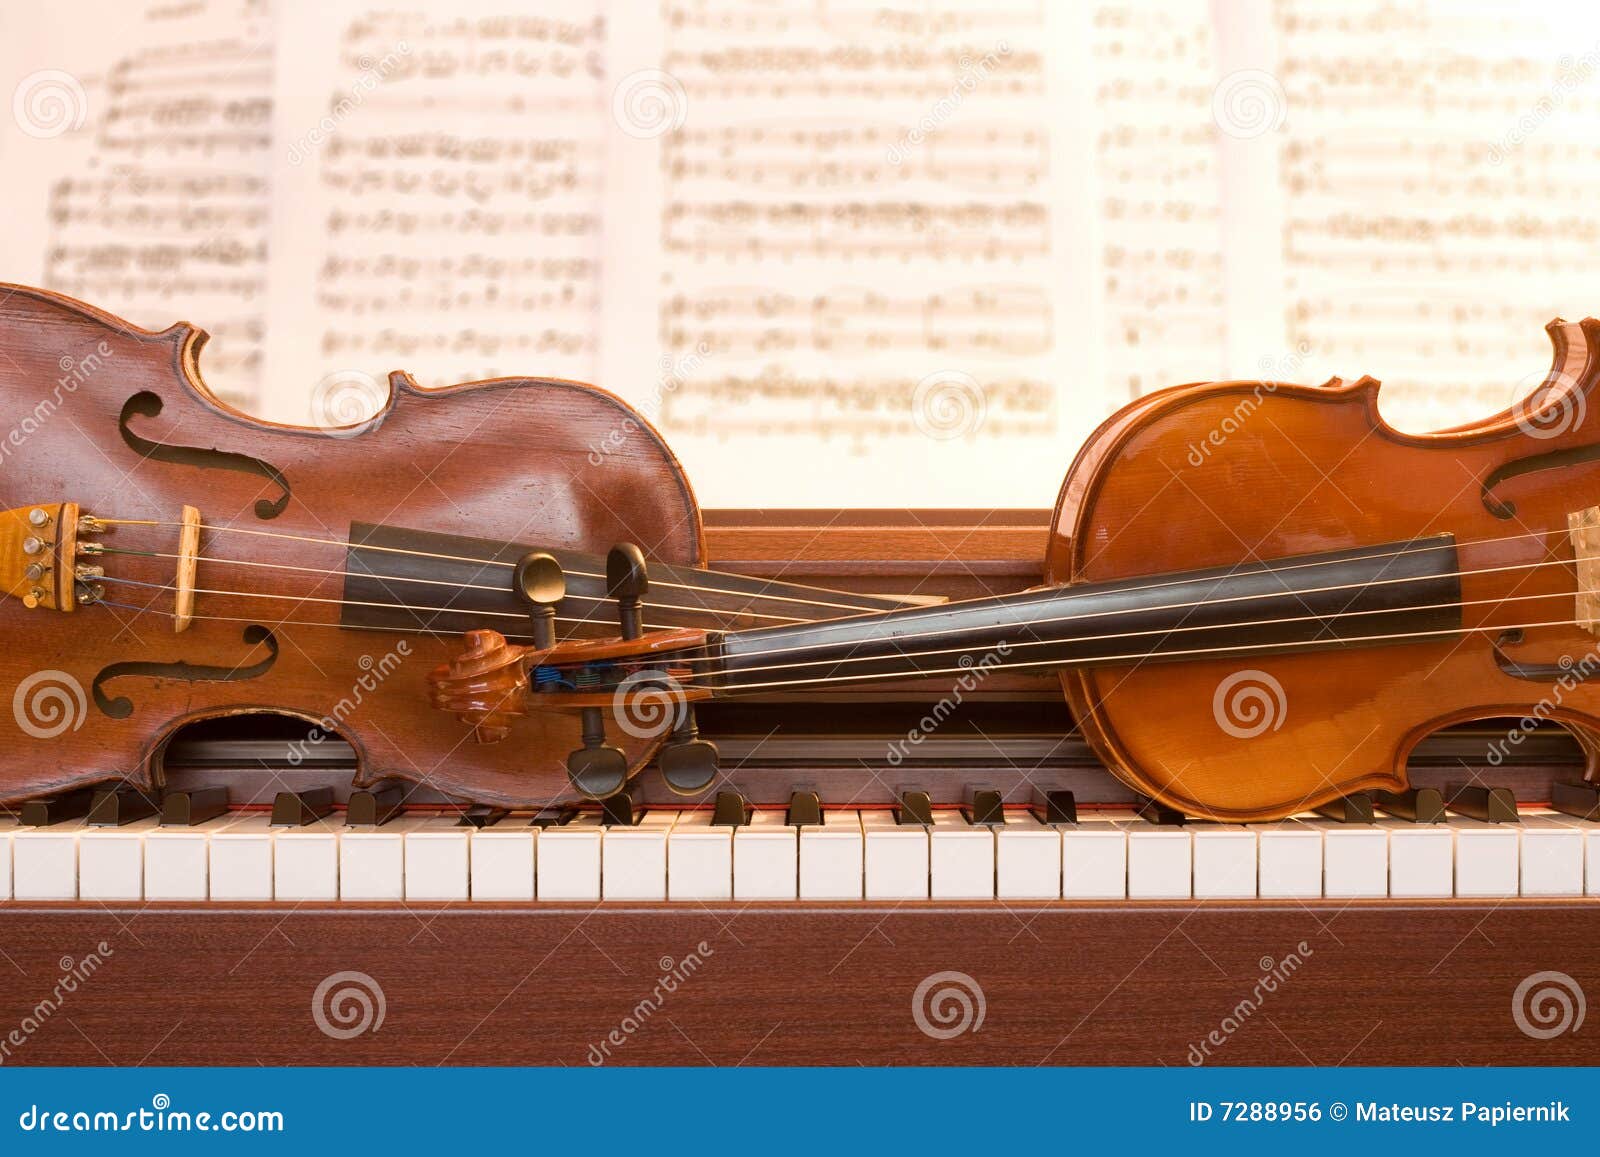 two violins on piano keys